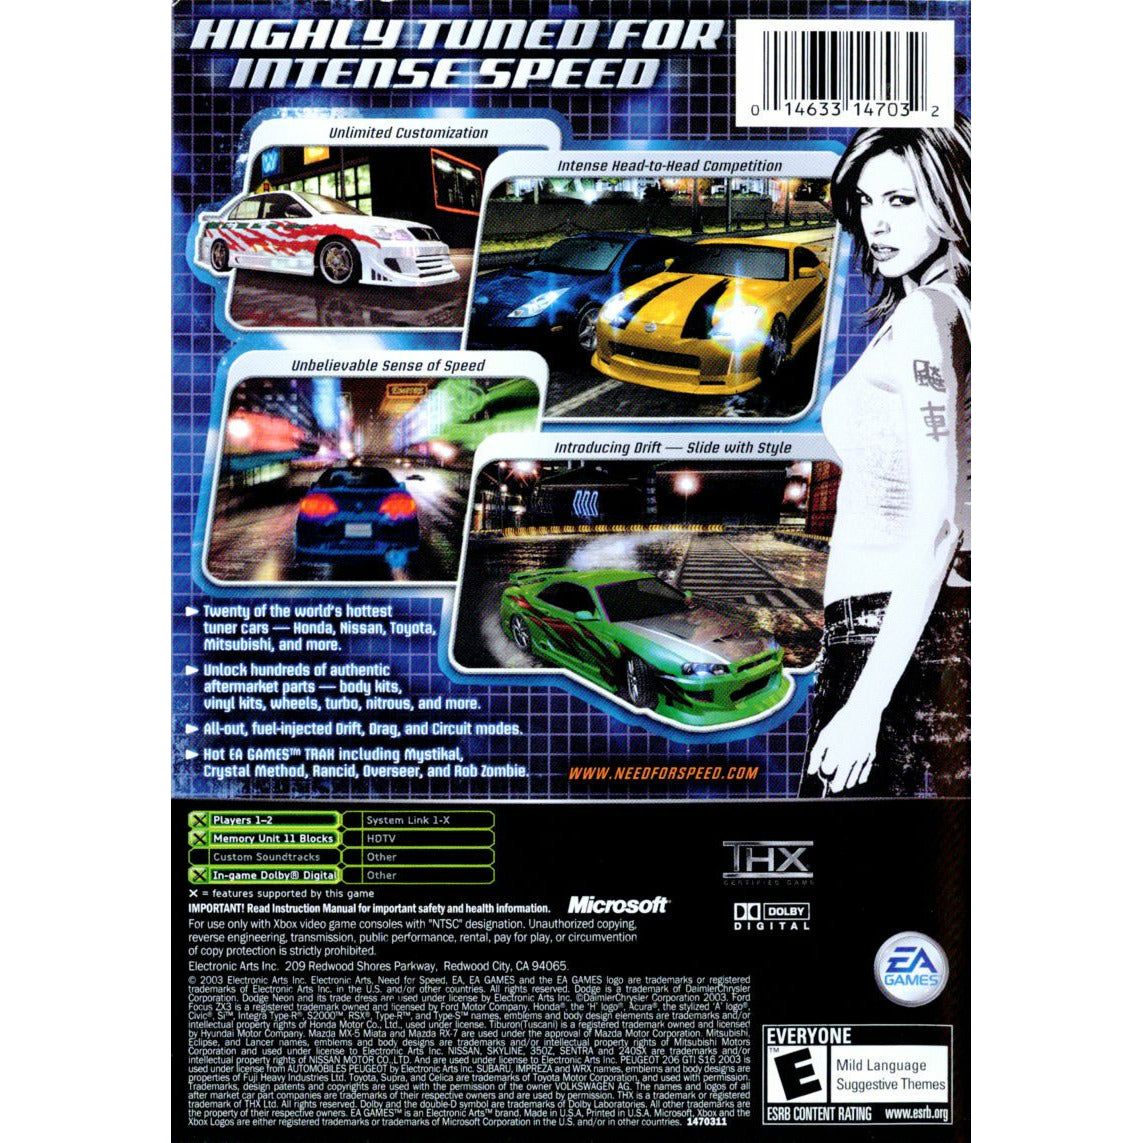 XBOX - Need for Speed Underground (Platinum Hits)